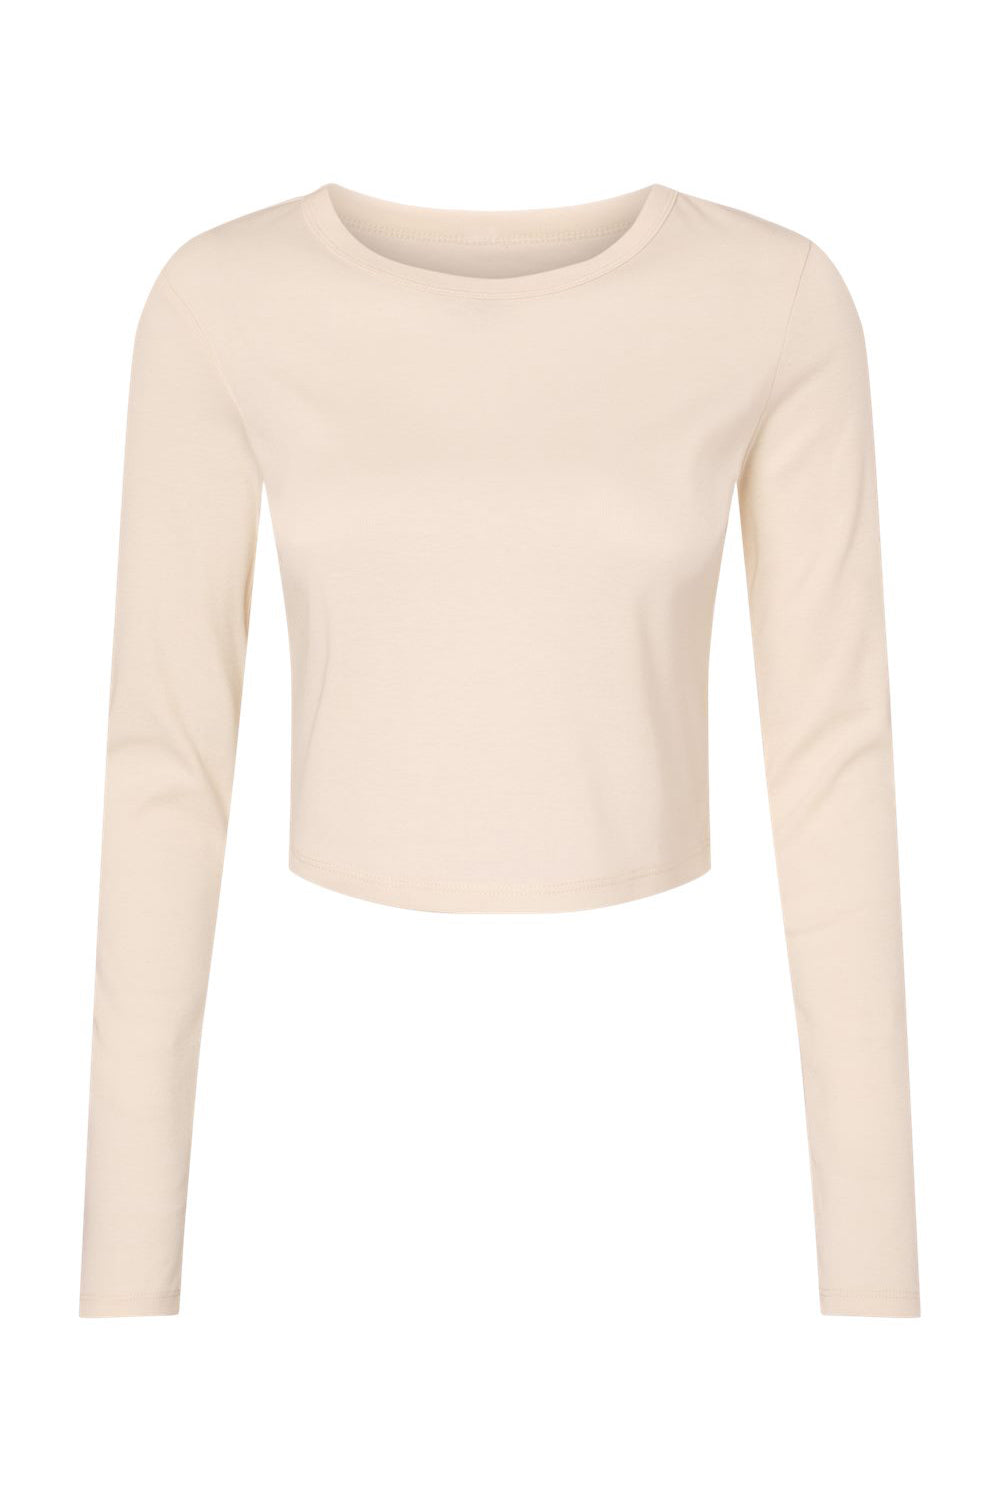 Bella + Canvas 1501 Womens Micro Rib Long Sleeve Crewneck T-Shirt Solid Natural Blend Flat Front